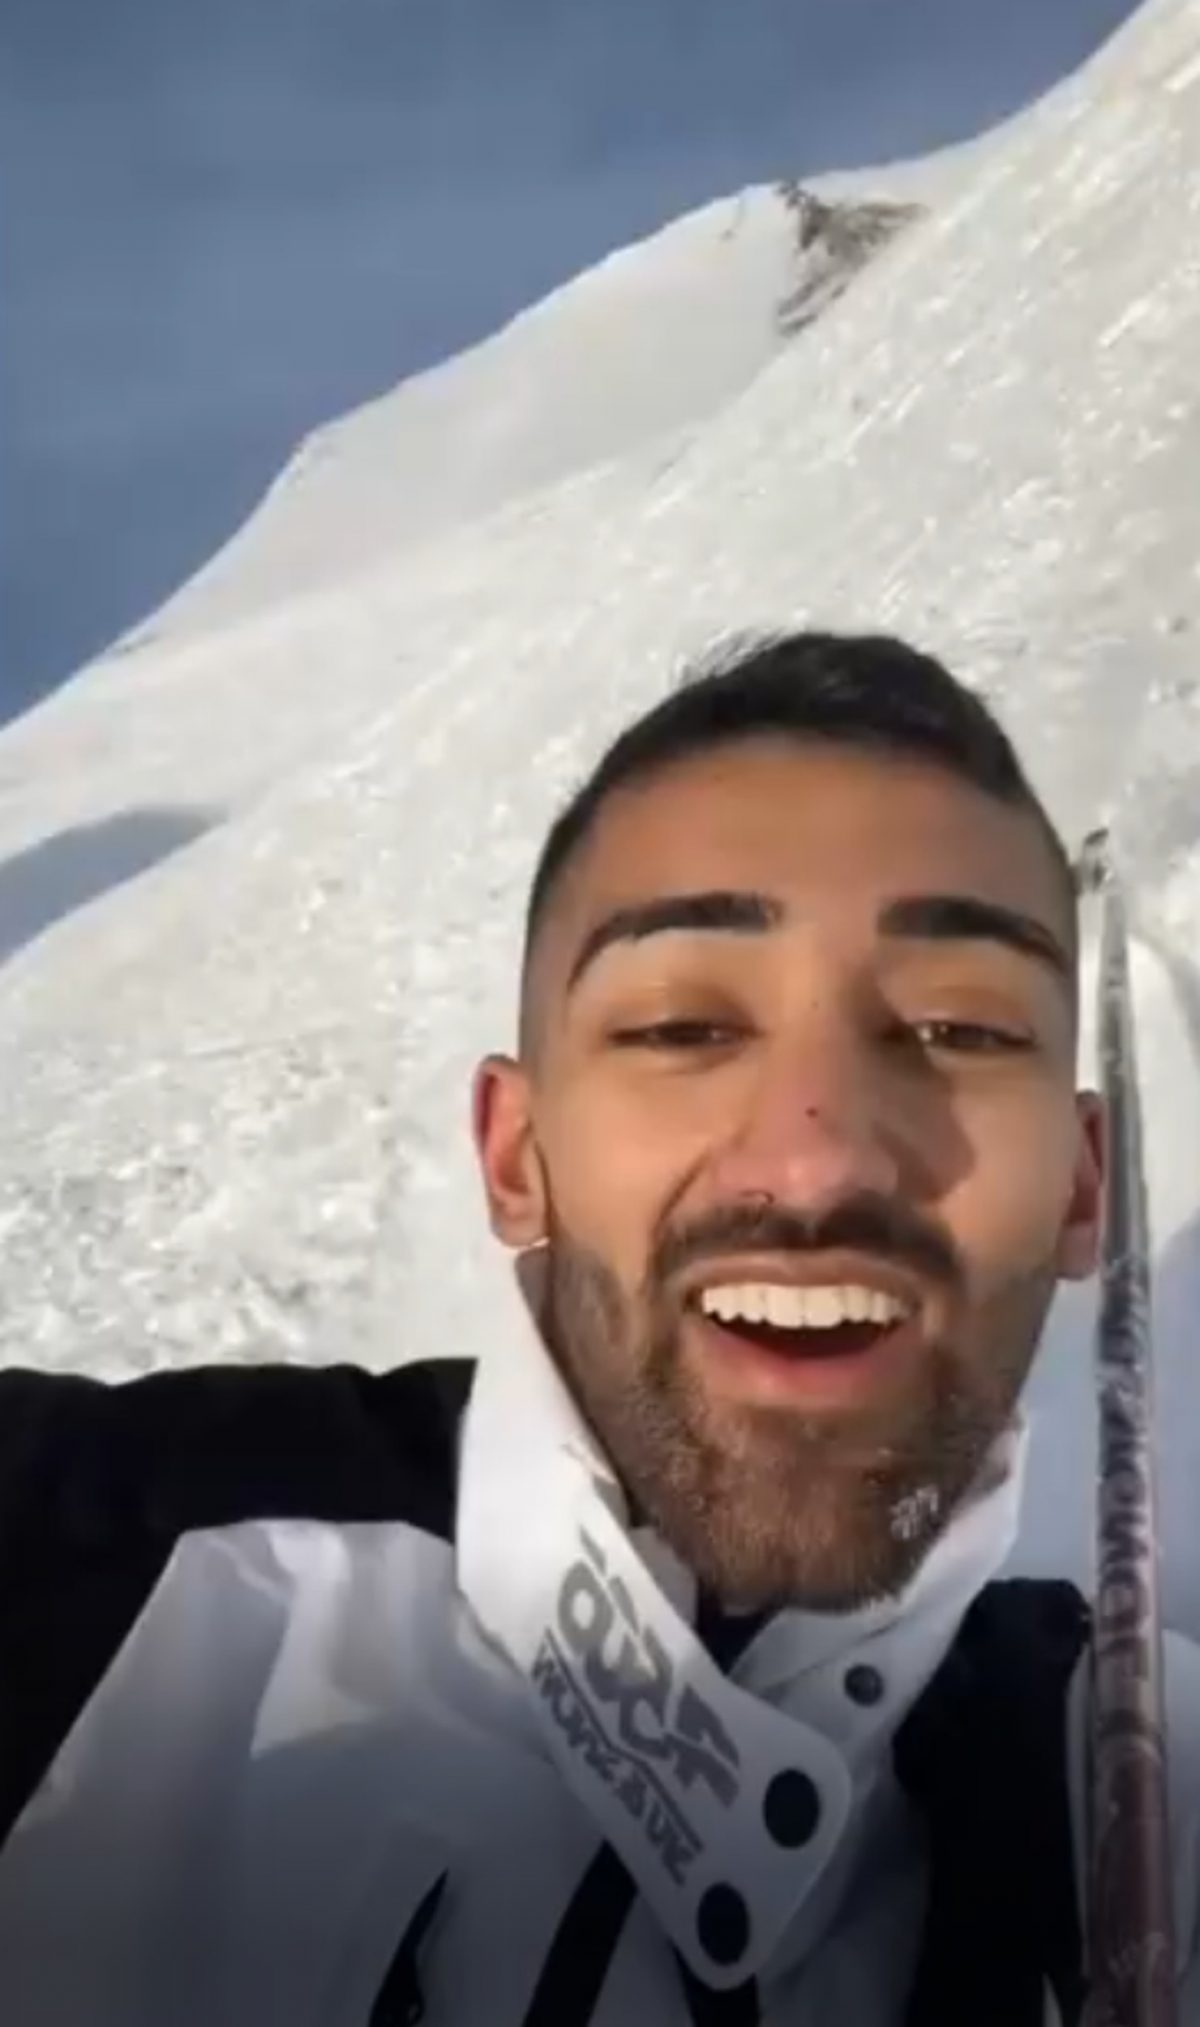 Husnain Asif enjoyed his ski